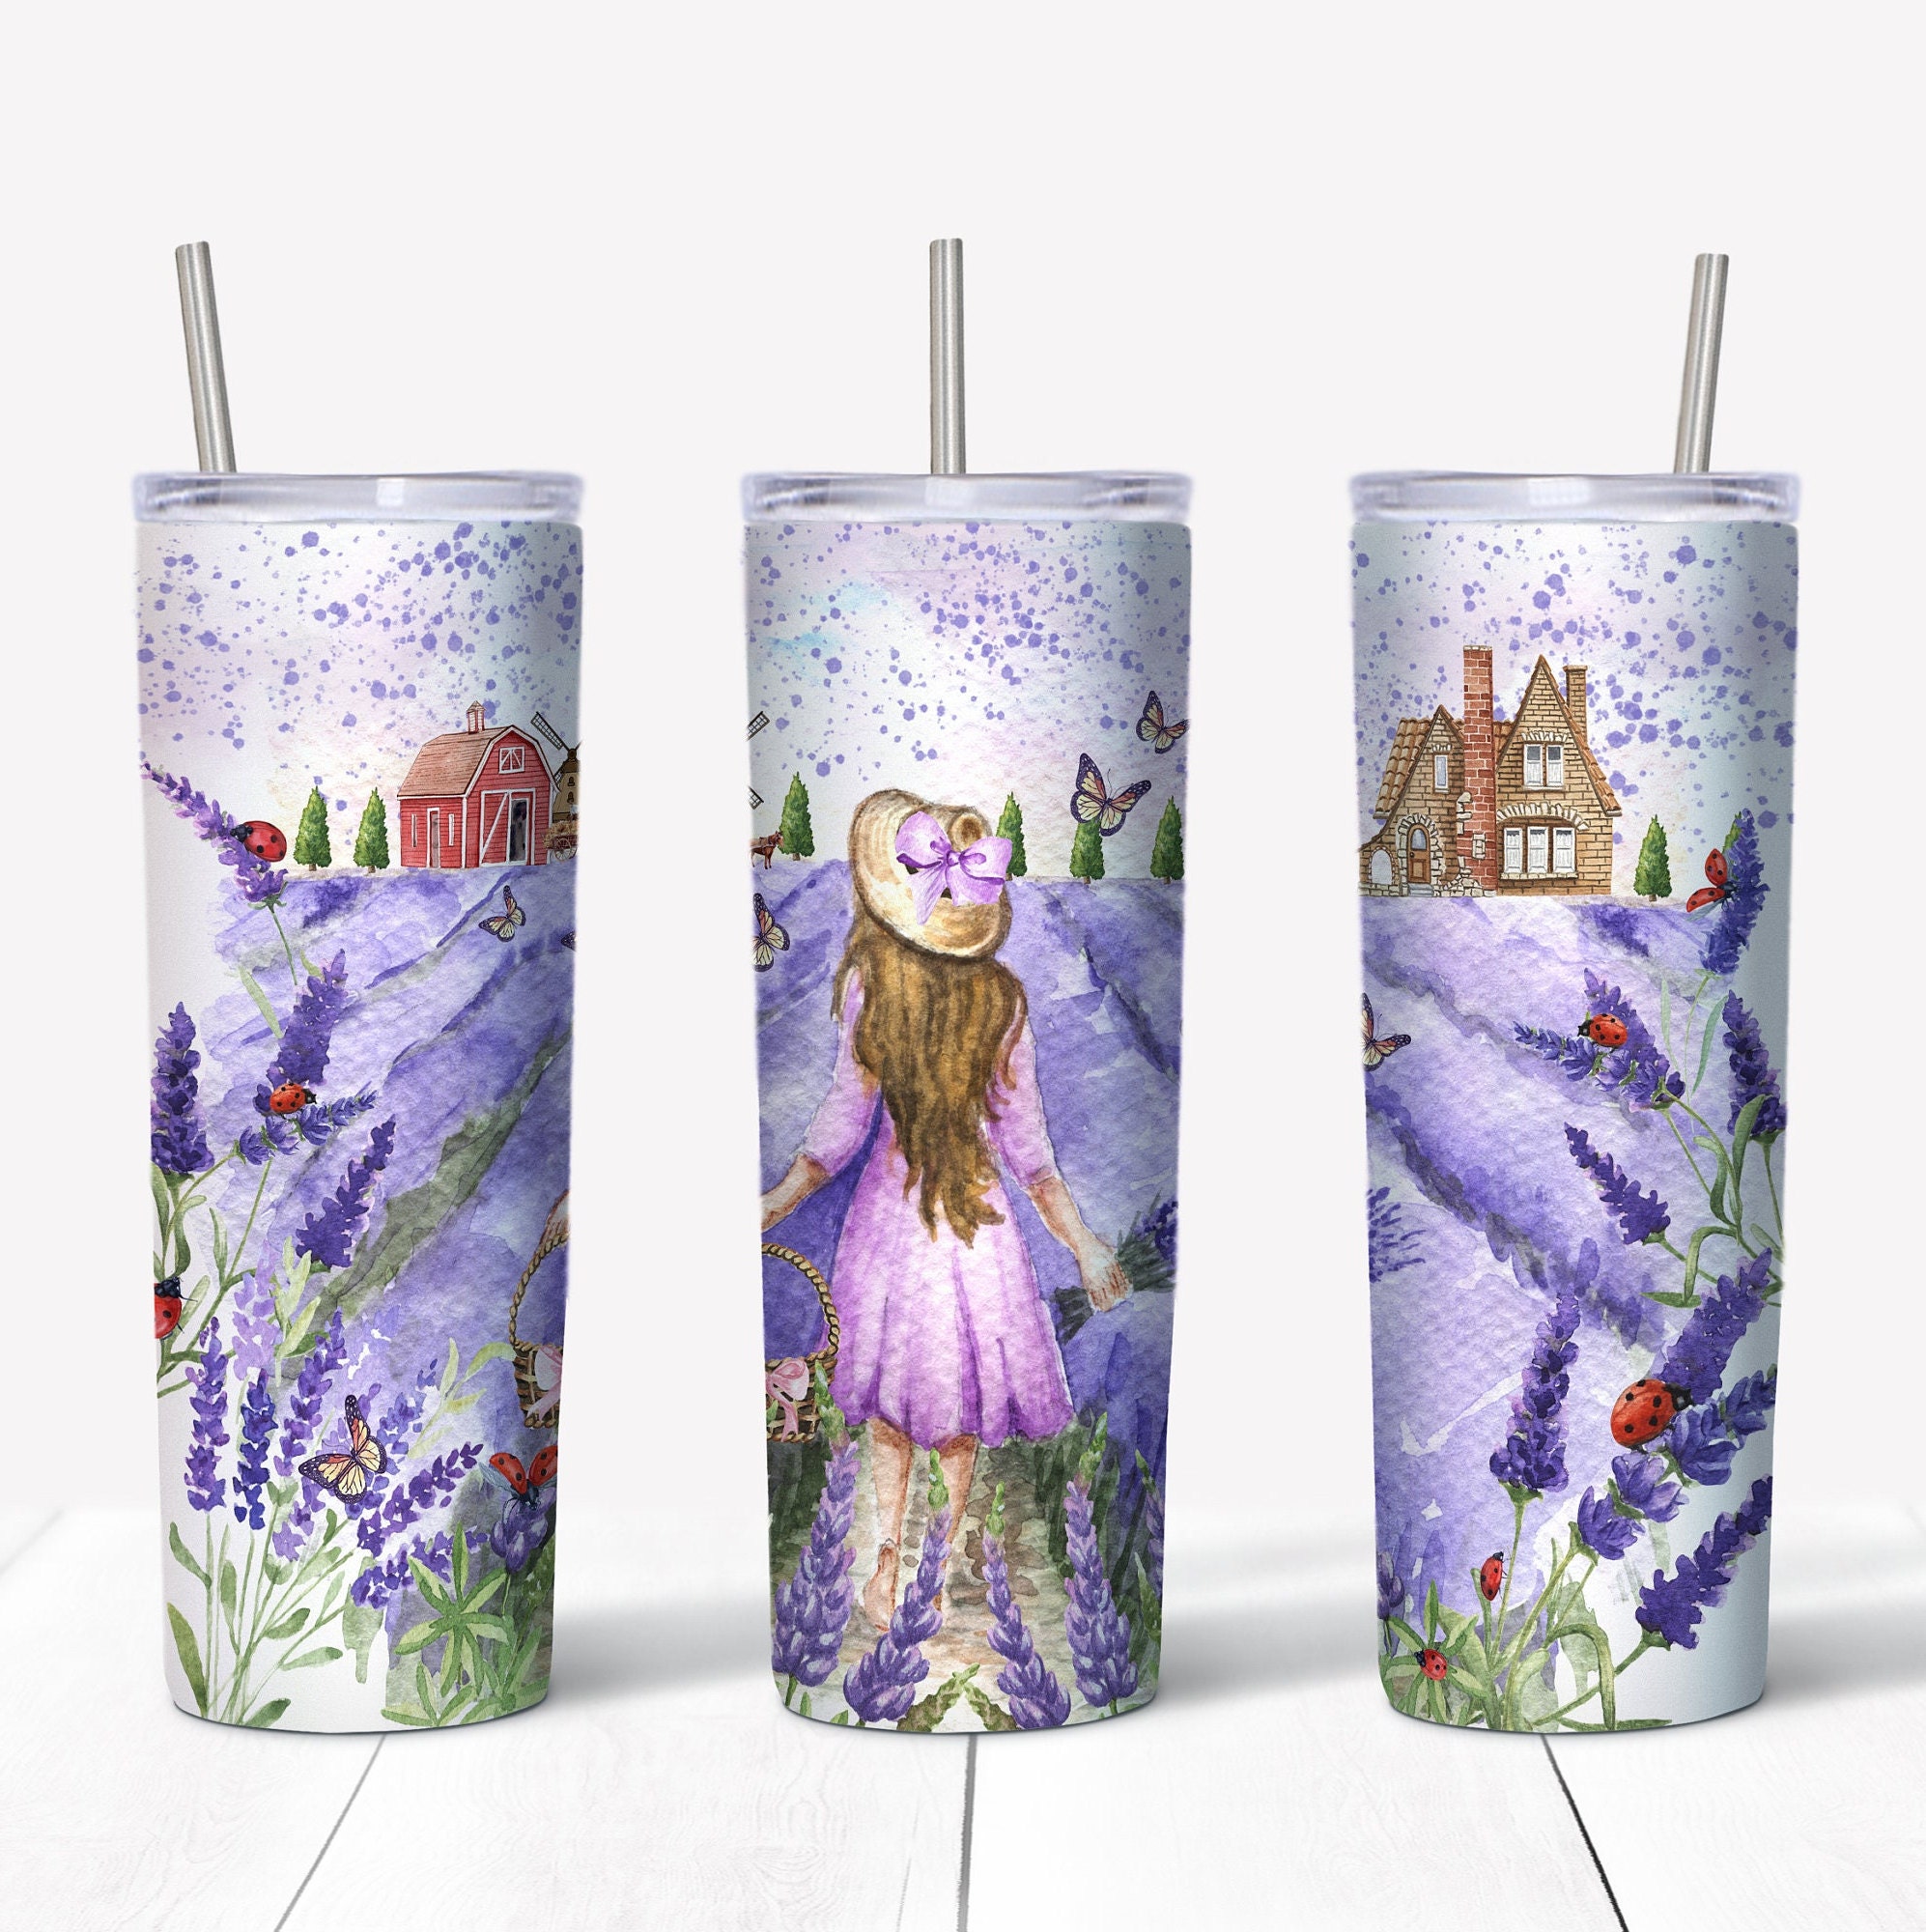 Xo Fetti Party Decorations Lavender Plastic Cups 50 Purple 